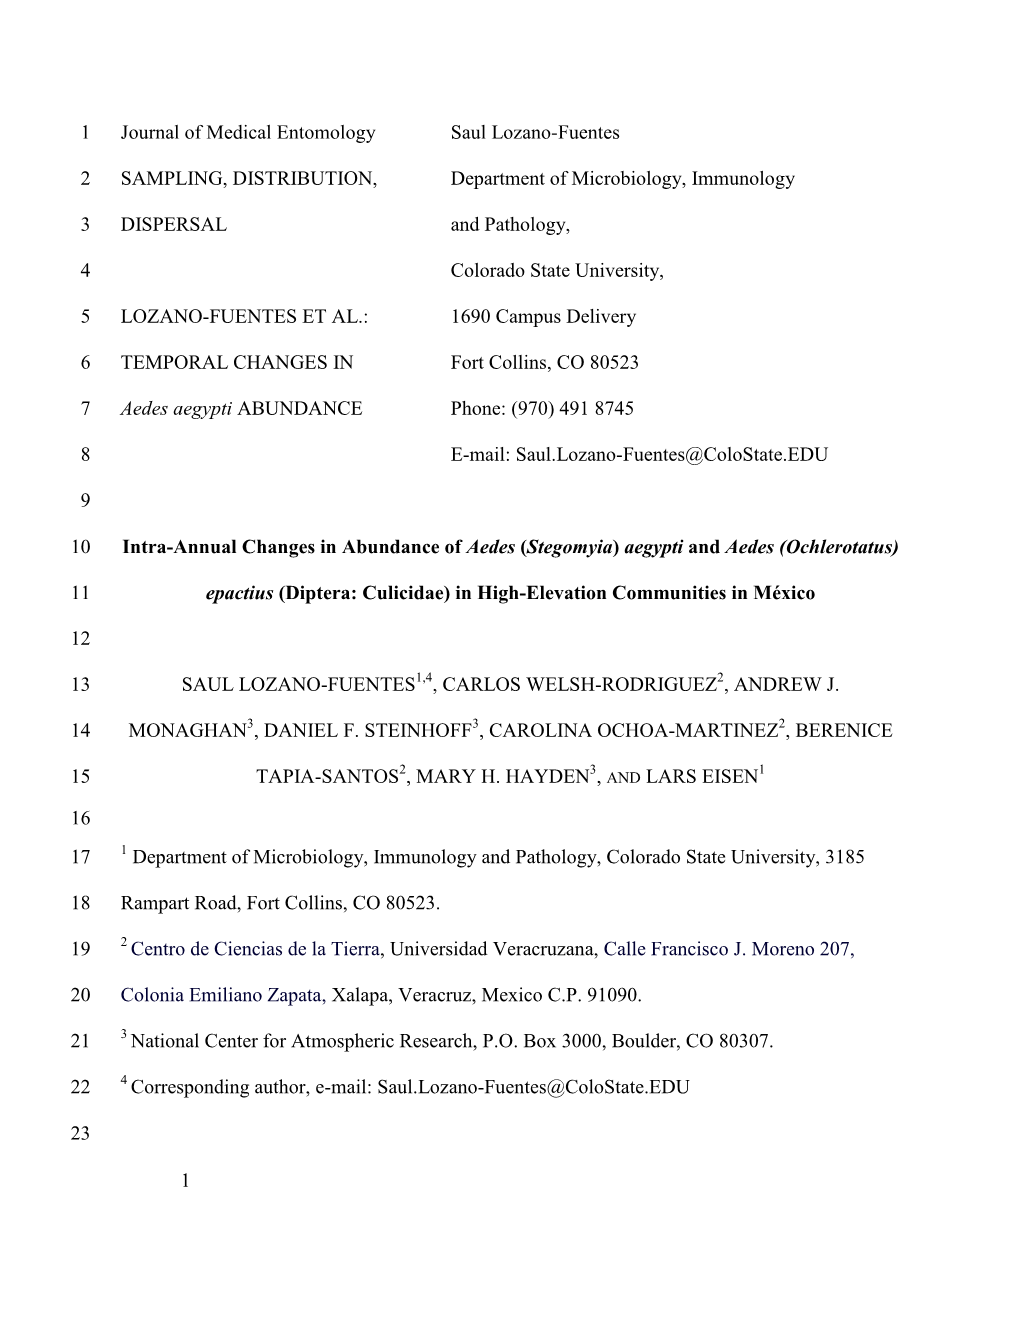 1 Journal of Medical Entomology Saul Lozano-Fuentes 1 SAMPLING